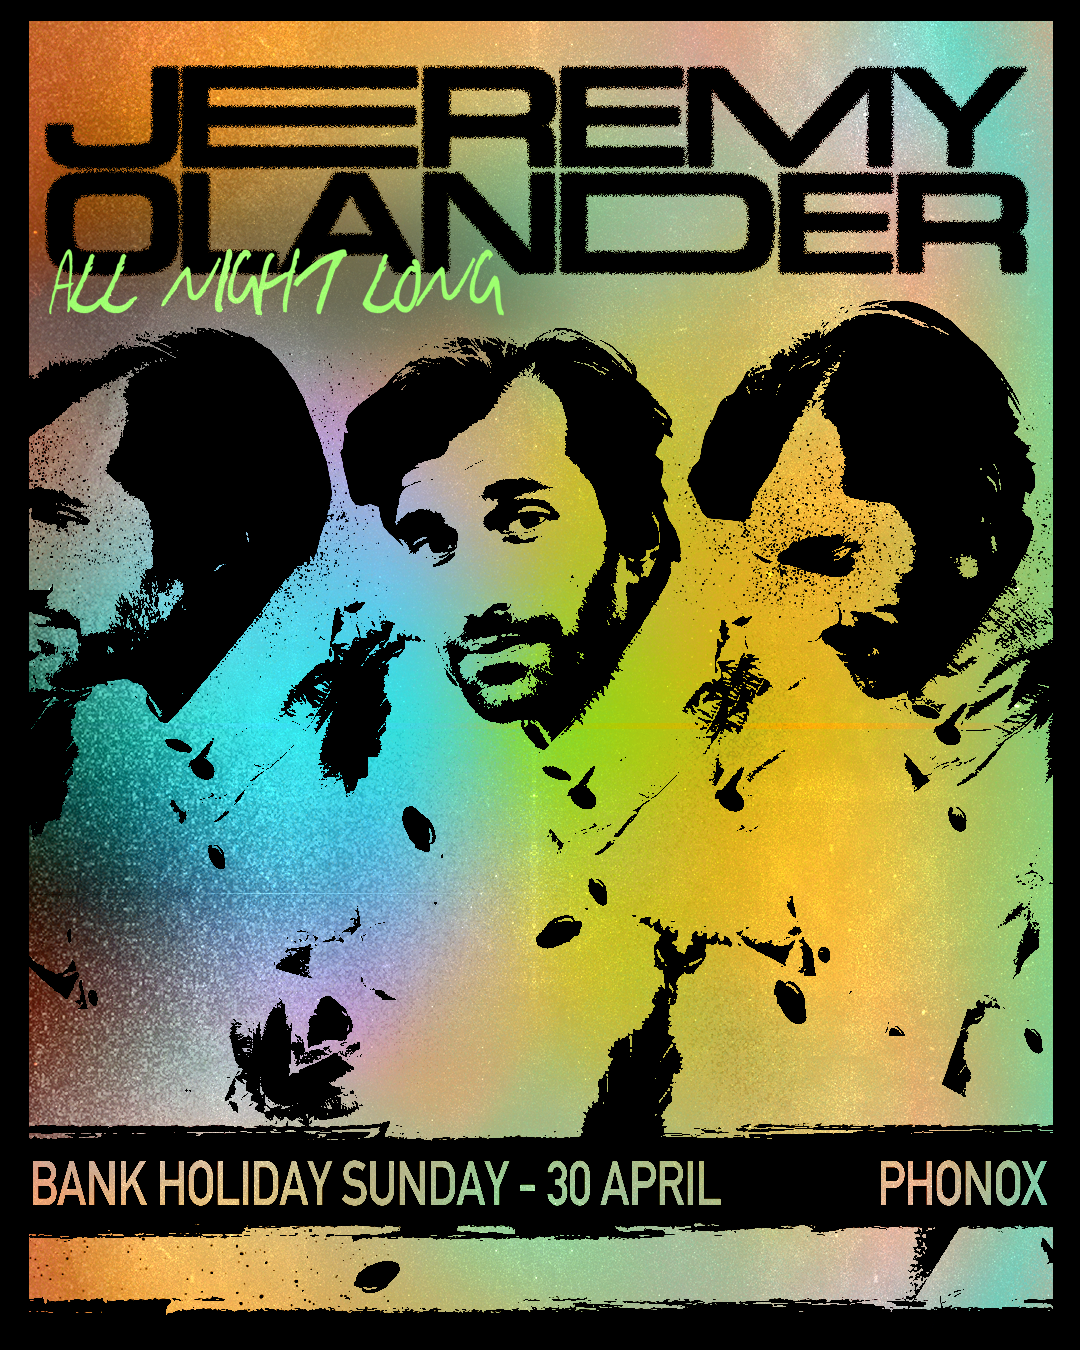 Bank Holiday Sunday: Jeremy Olander (All Night Long) - London - Página trasera